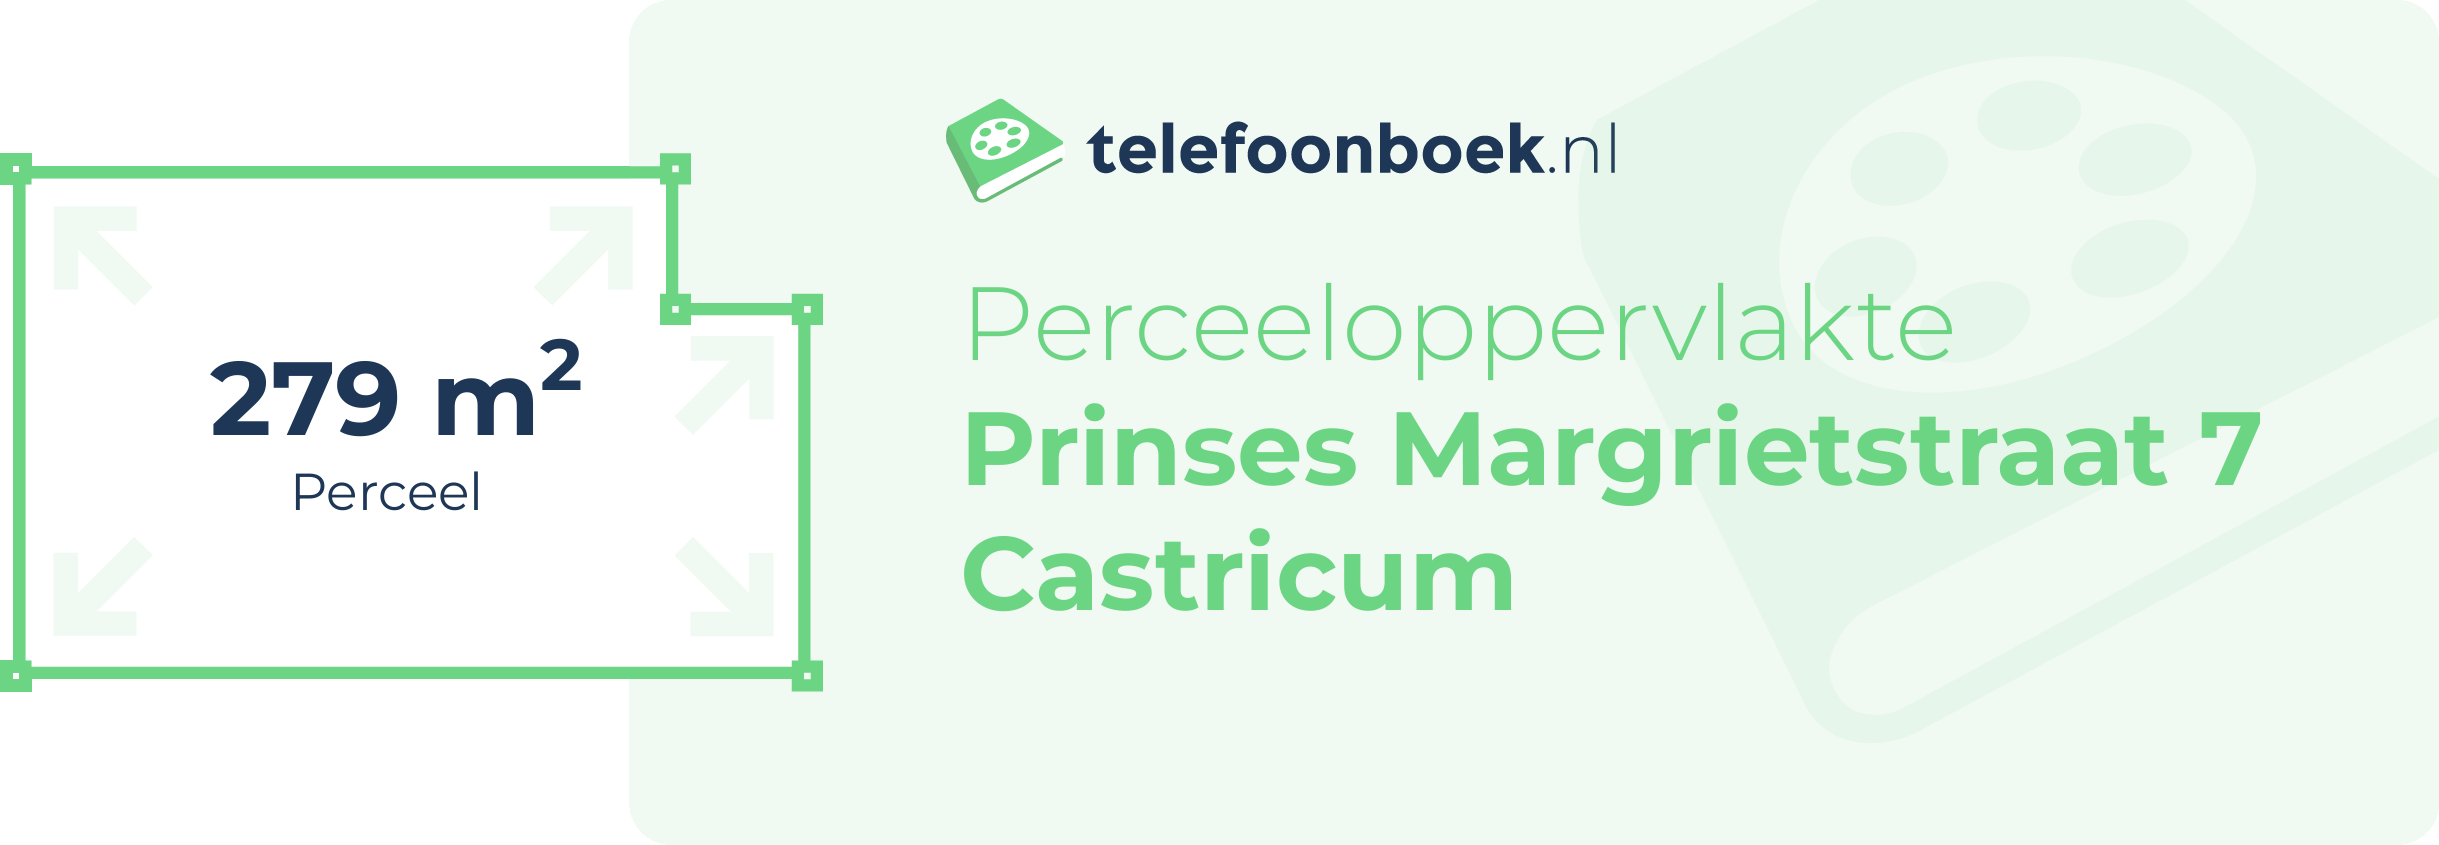 Perceeloppervlakte Prinses Margrietstraat 7 Castricum